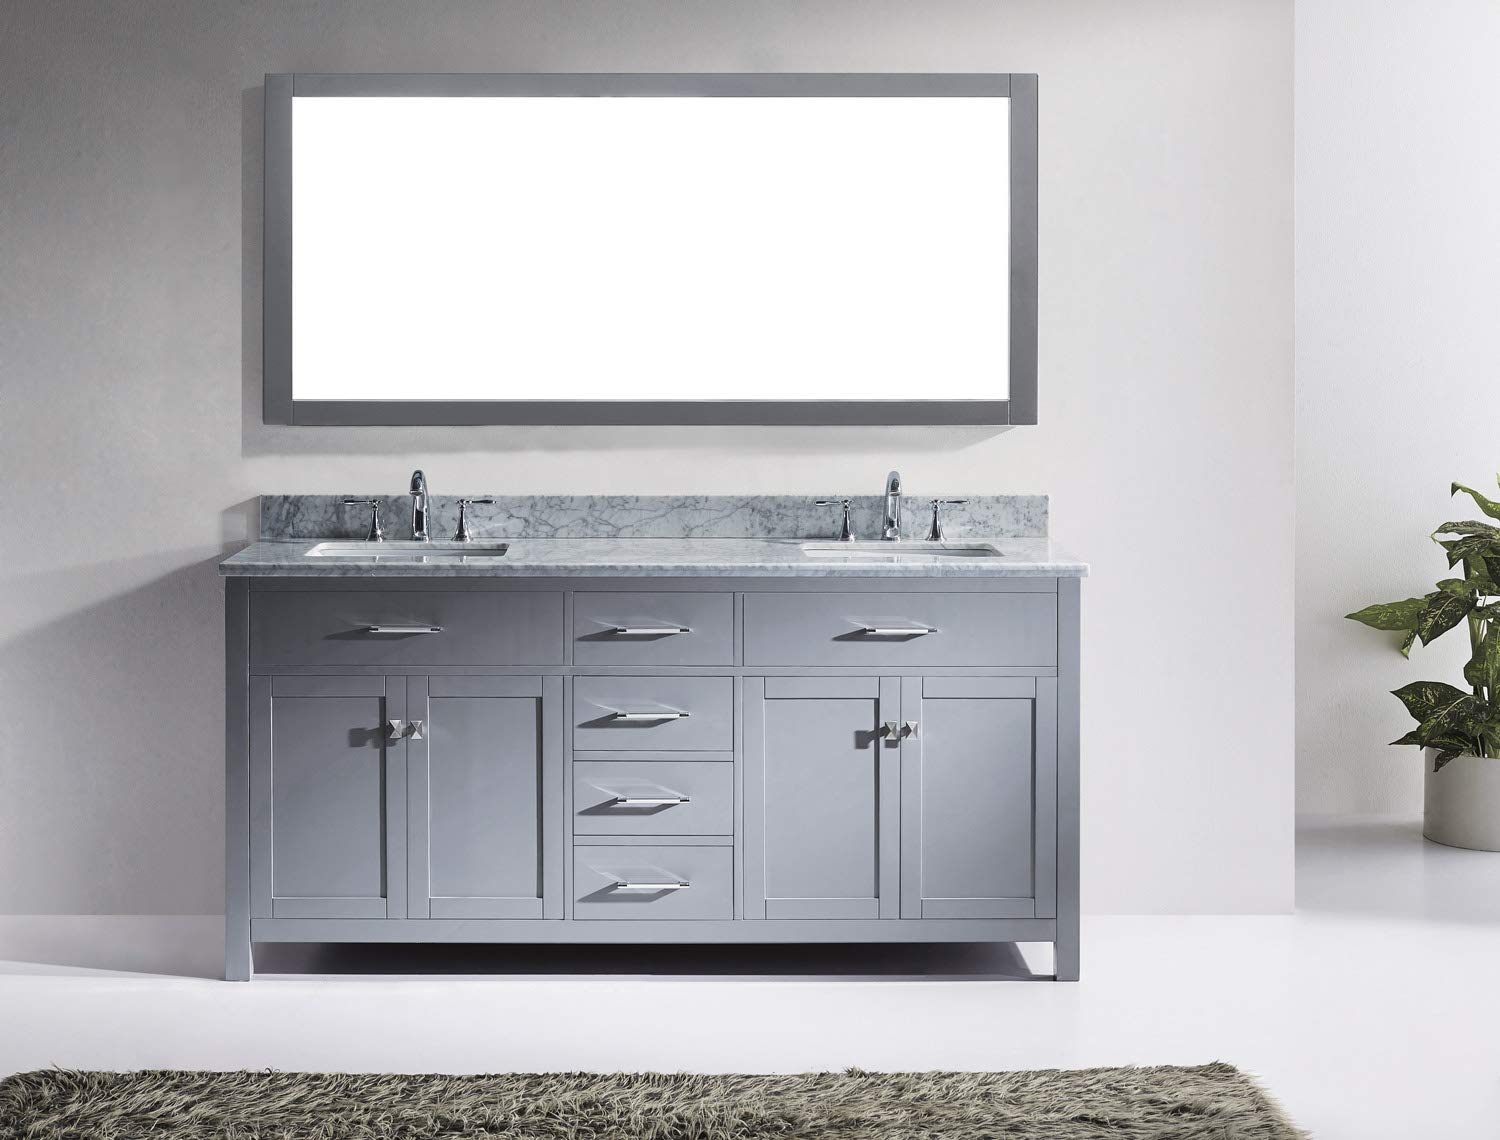 Virtu USA Caroline 72 inch Double Sink Bathroom Vanity Set in Grey w/ Square Undermount Sink, Italian Carrara White Marble Countertop, No Faucet, 1 Mirror - MD-2072-WMSQ-GR